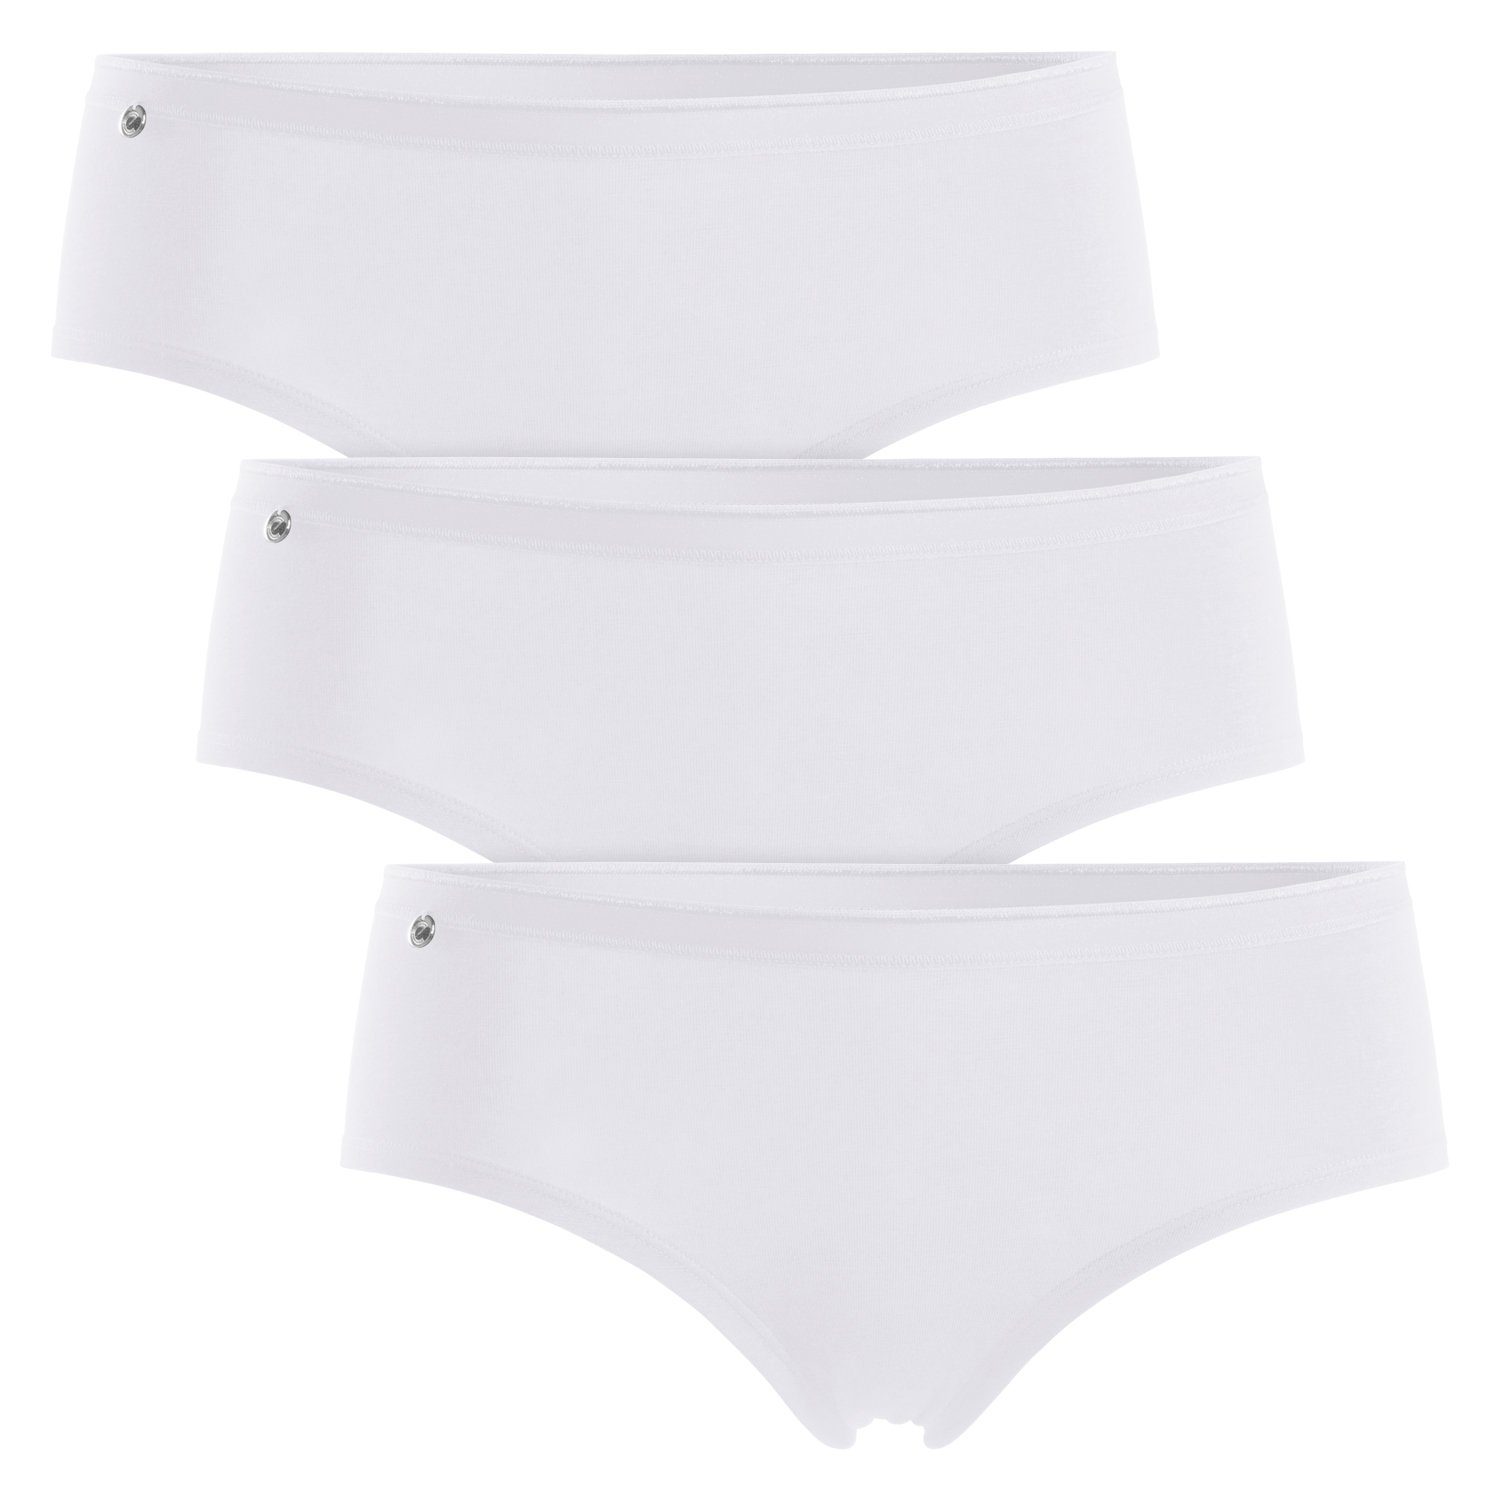 celodoro Panty Damen Basic Panty (3er Pack) Hipster Slip mit Zier-Logo Weiß | Klassische Panties